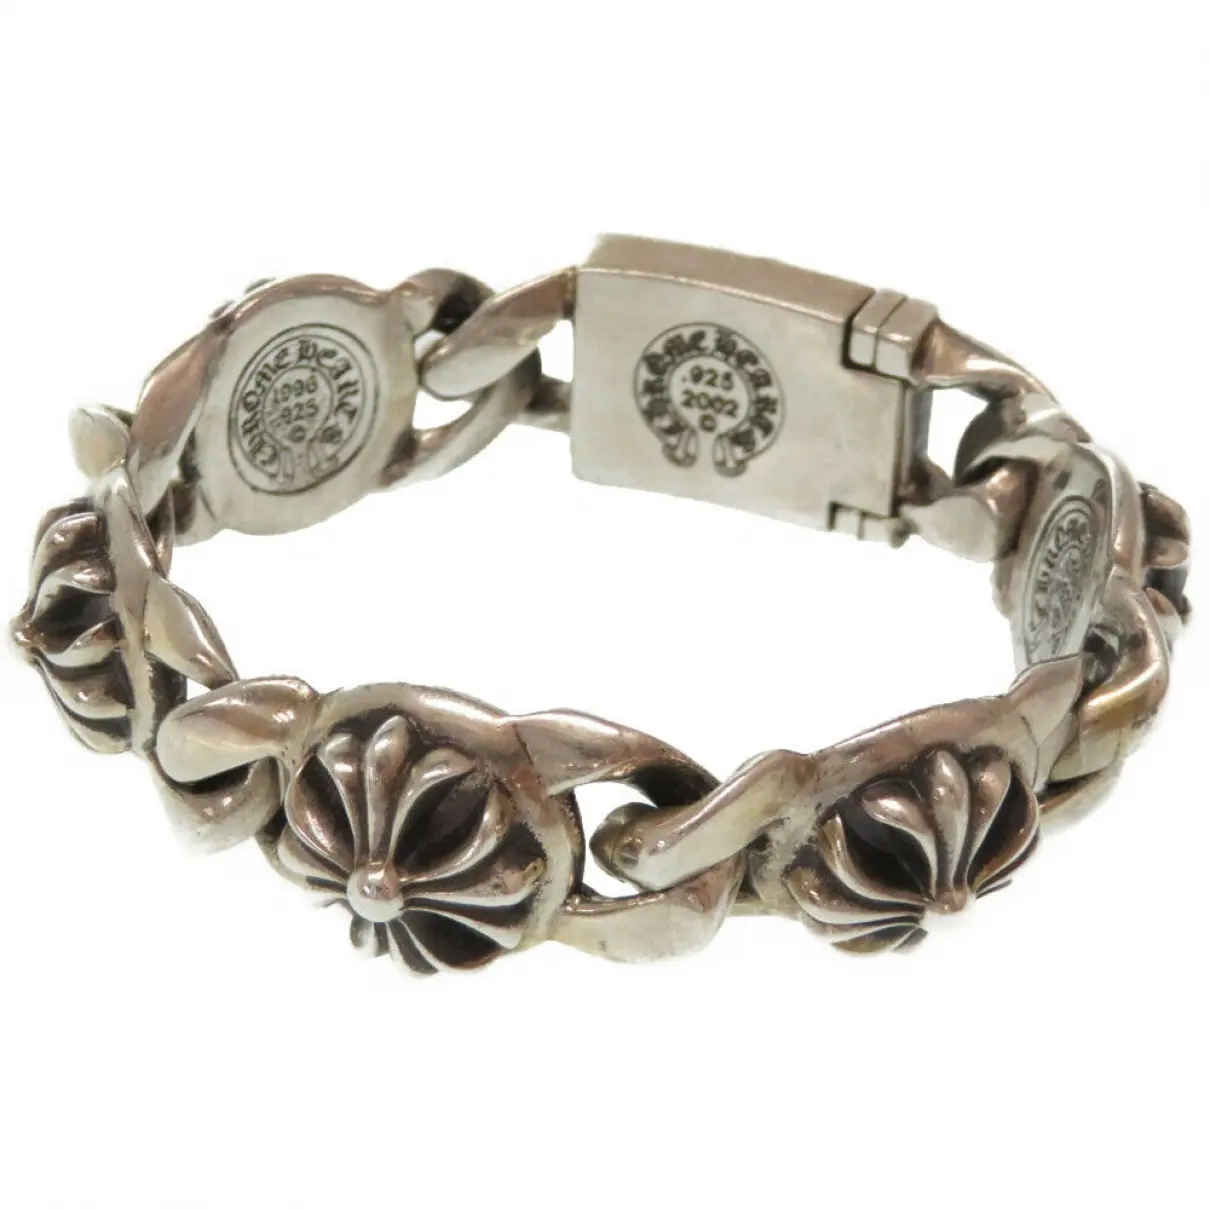 Buy Chrome Hearts Silver bracelet online